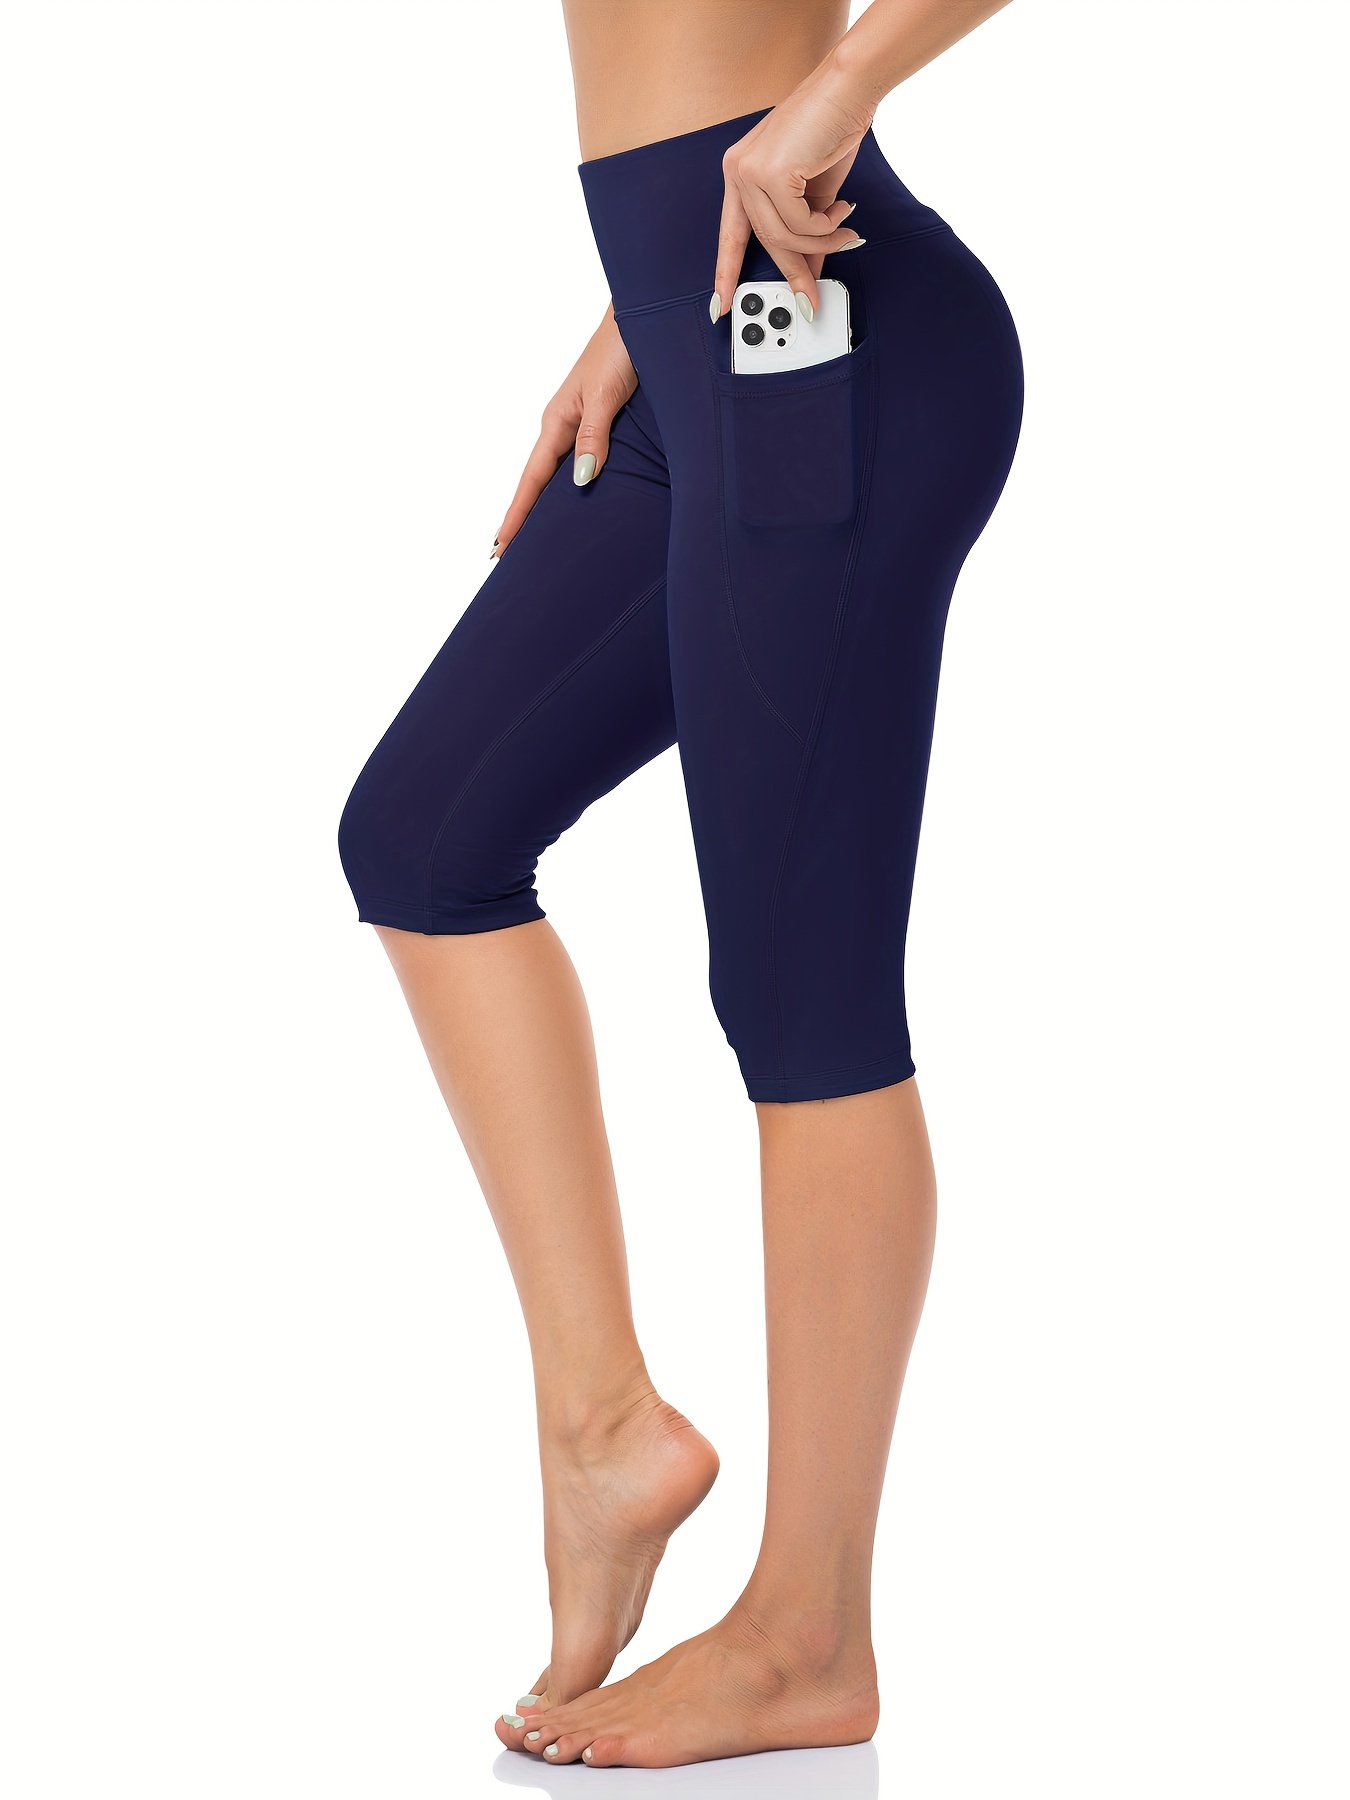  Womens Knee Length Leggings-High Waisted Capri Pants Biker  Shorts For Women Yoga Workout Exercise Short Casual Summer